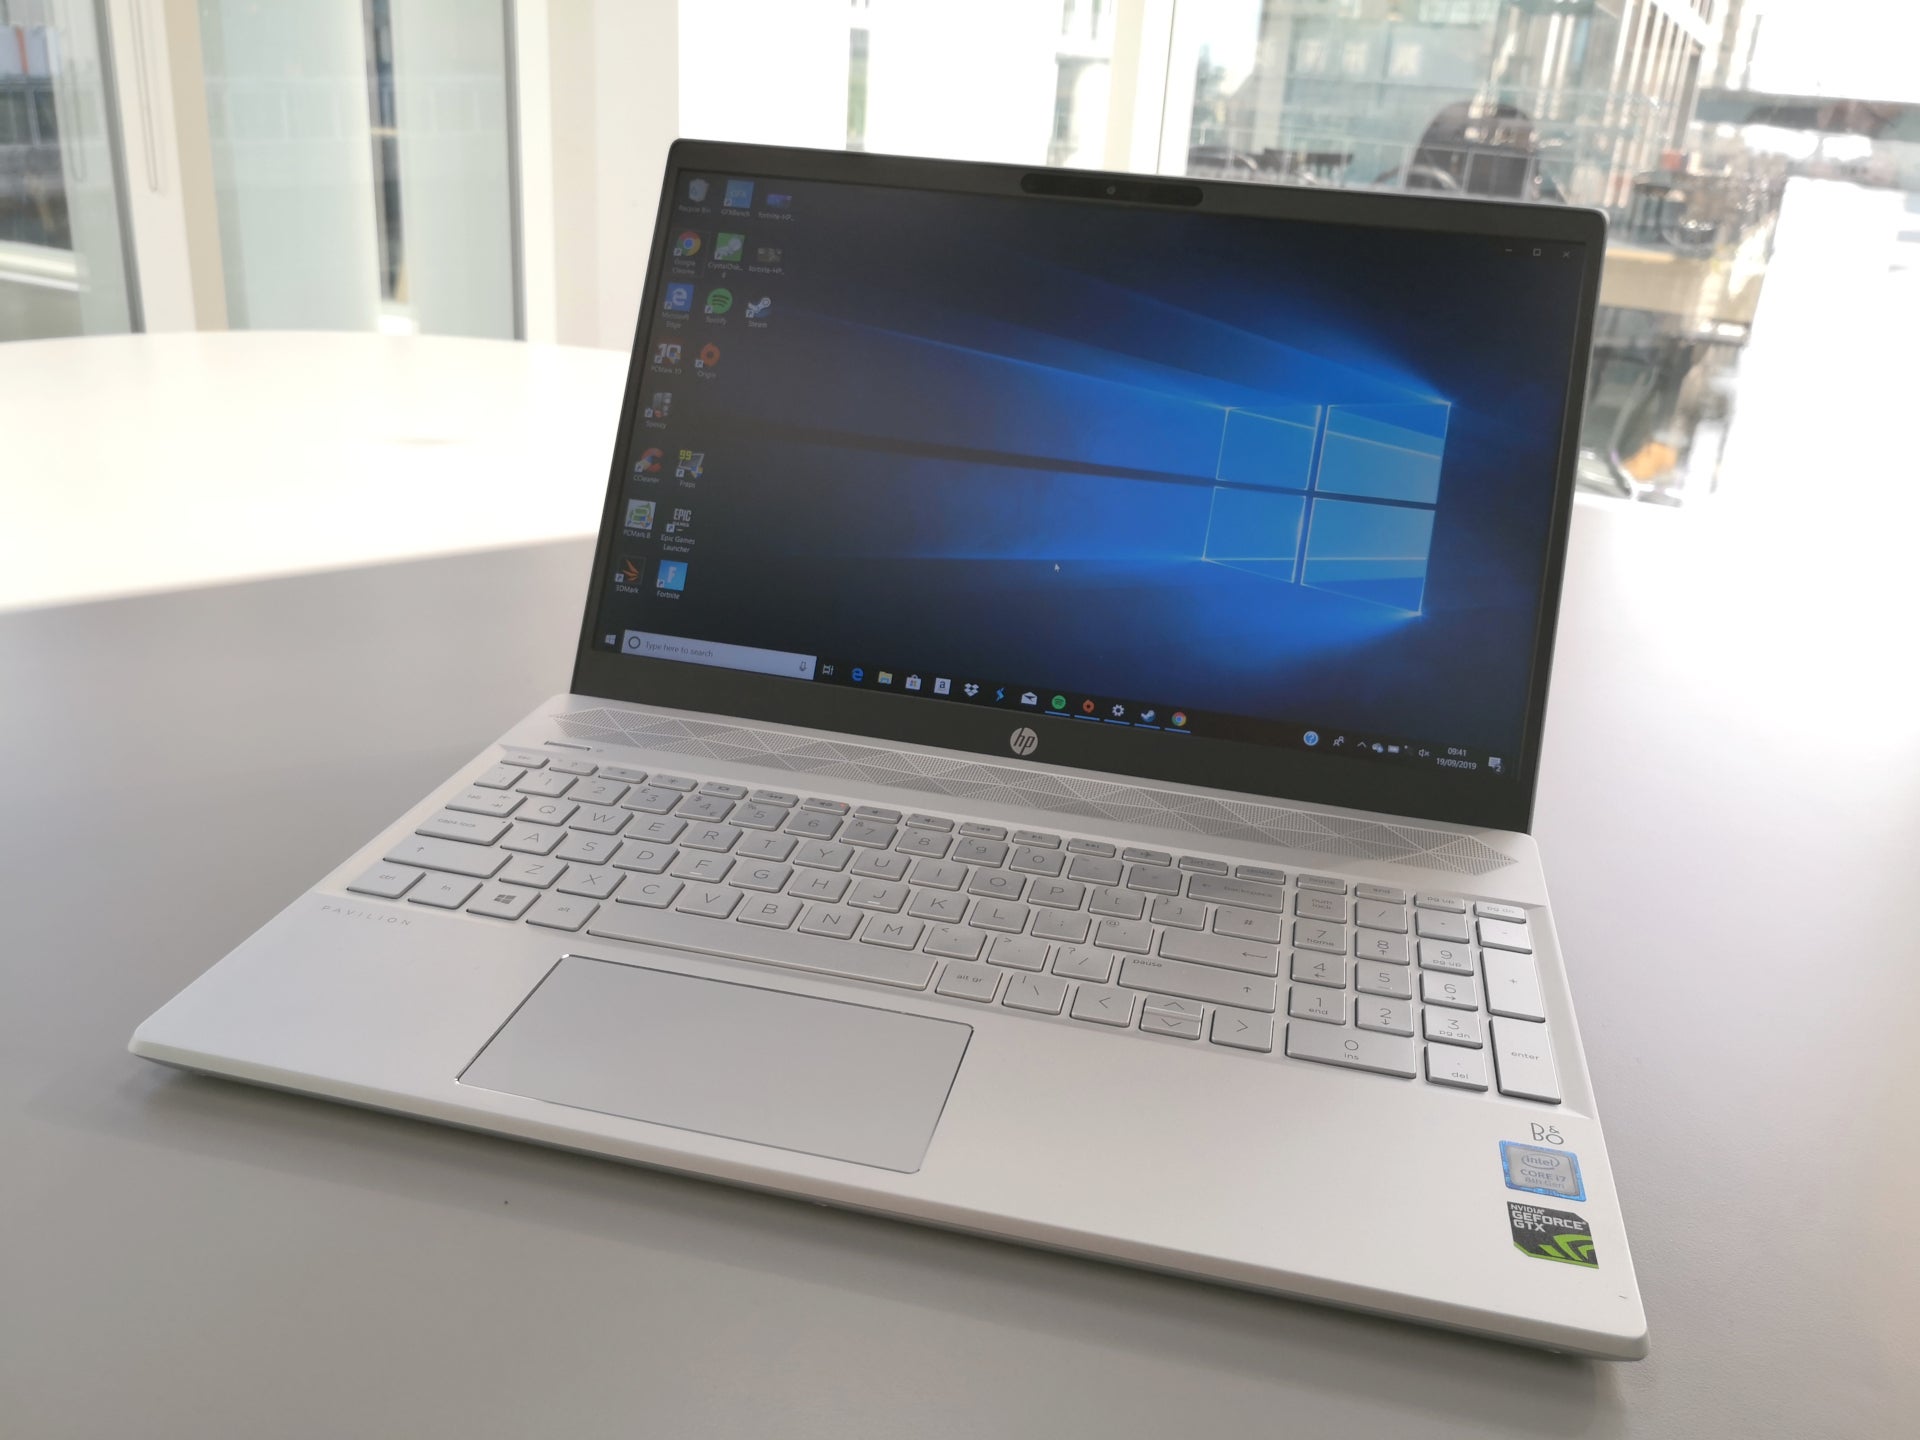 HP Pavilion 15 Review: An affordable but unremarkable lifestyle laptop